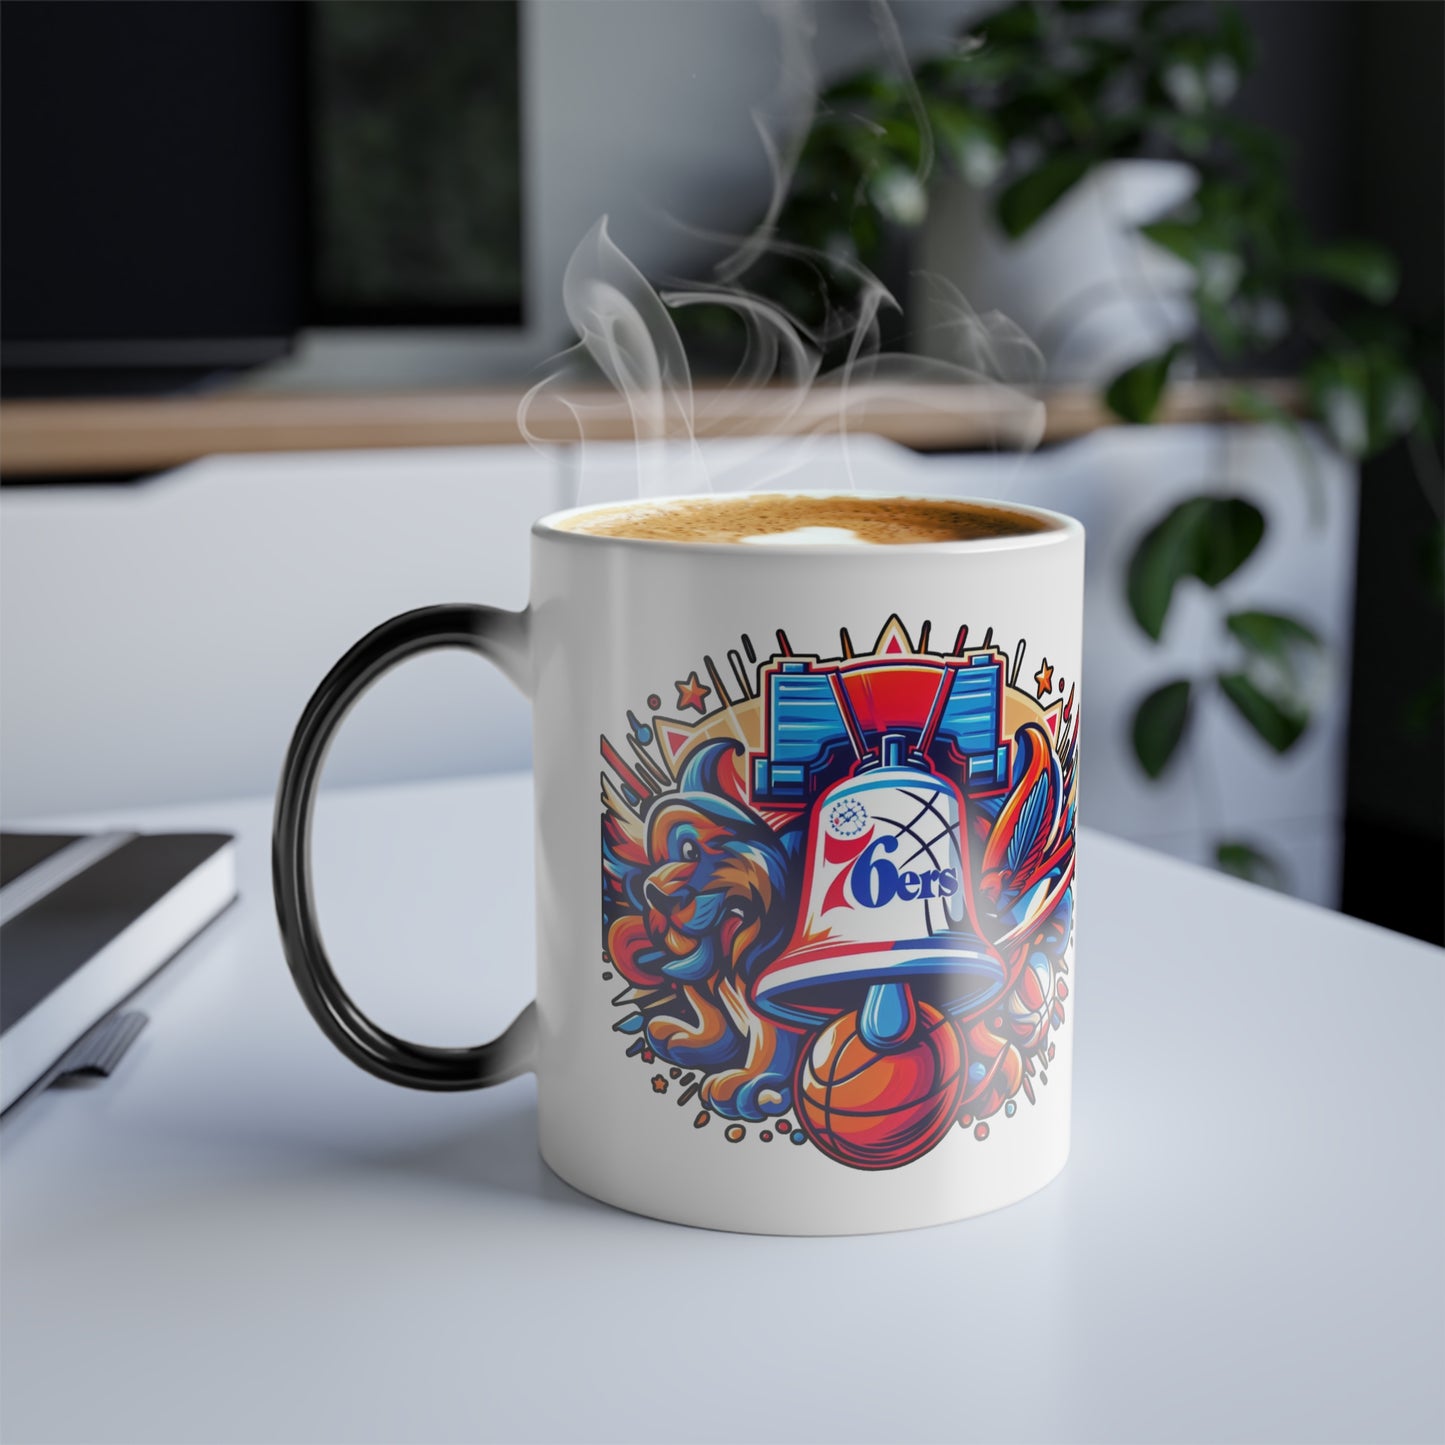 Color morphing ceramic custom Mug 11oz  (Philadelphia 76ers, NBA basketball team)